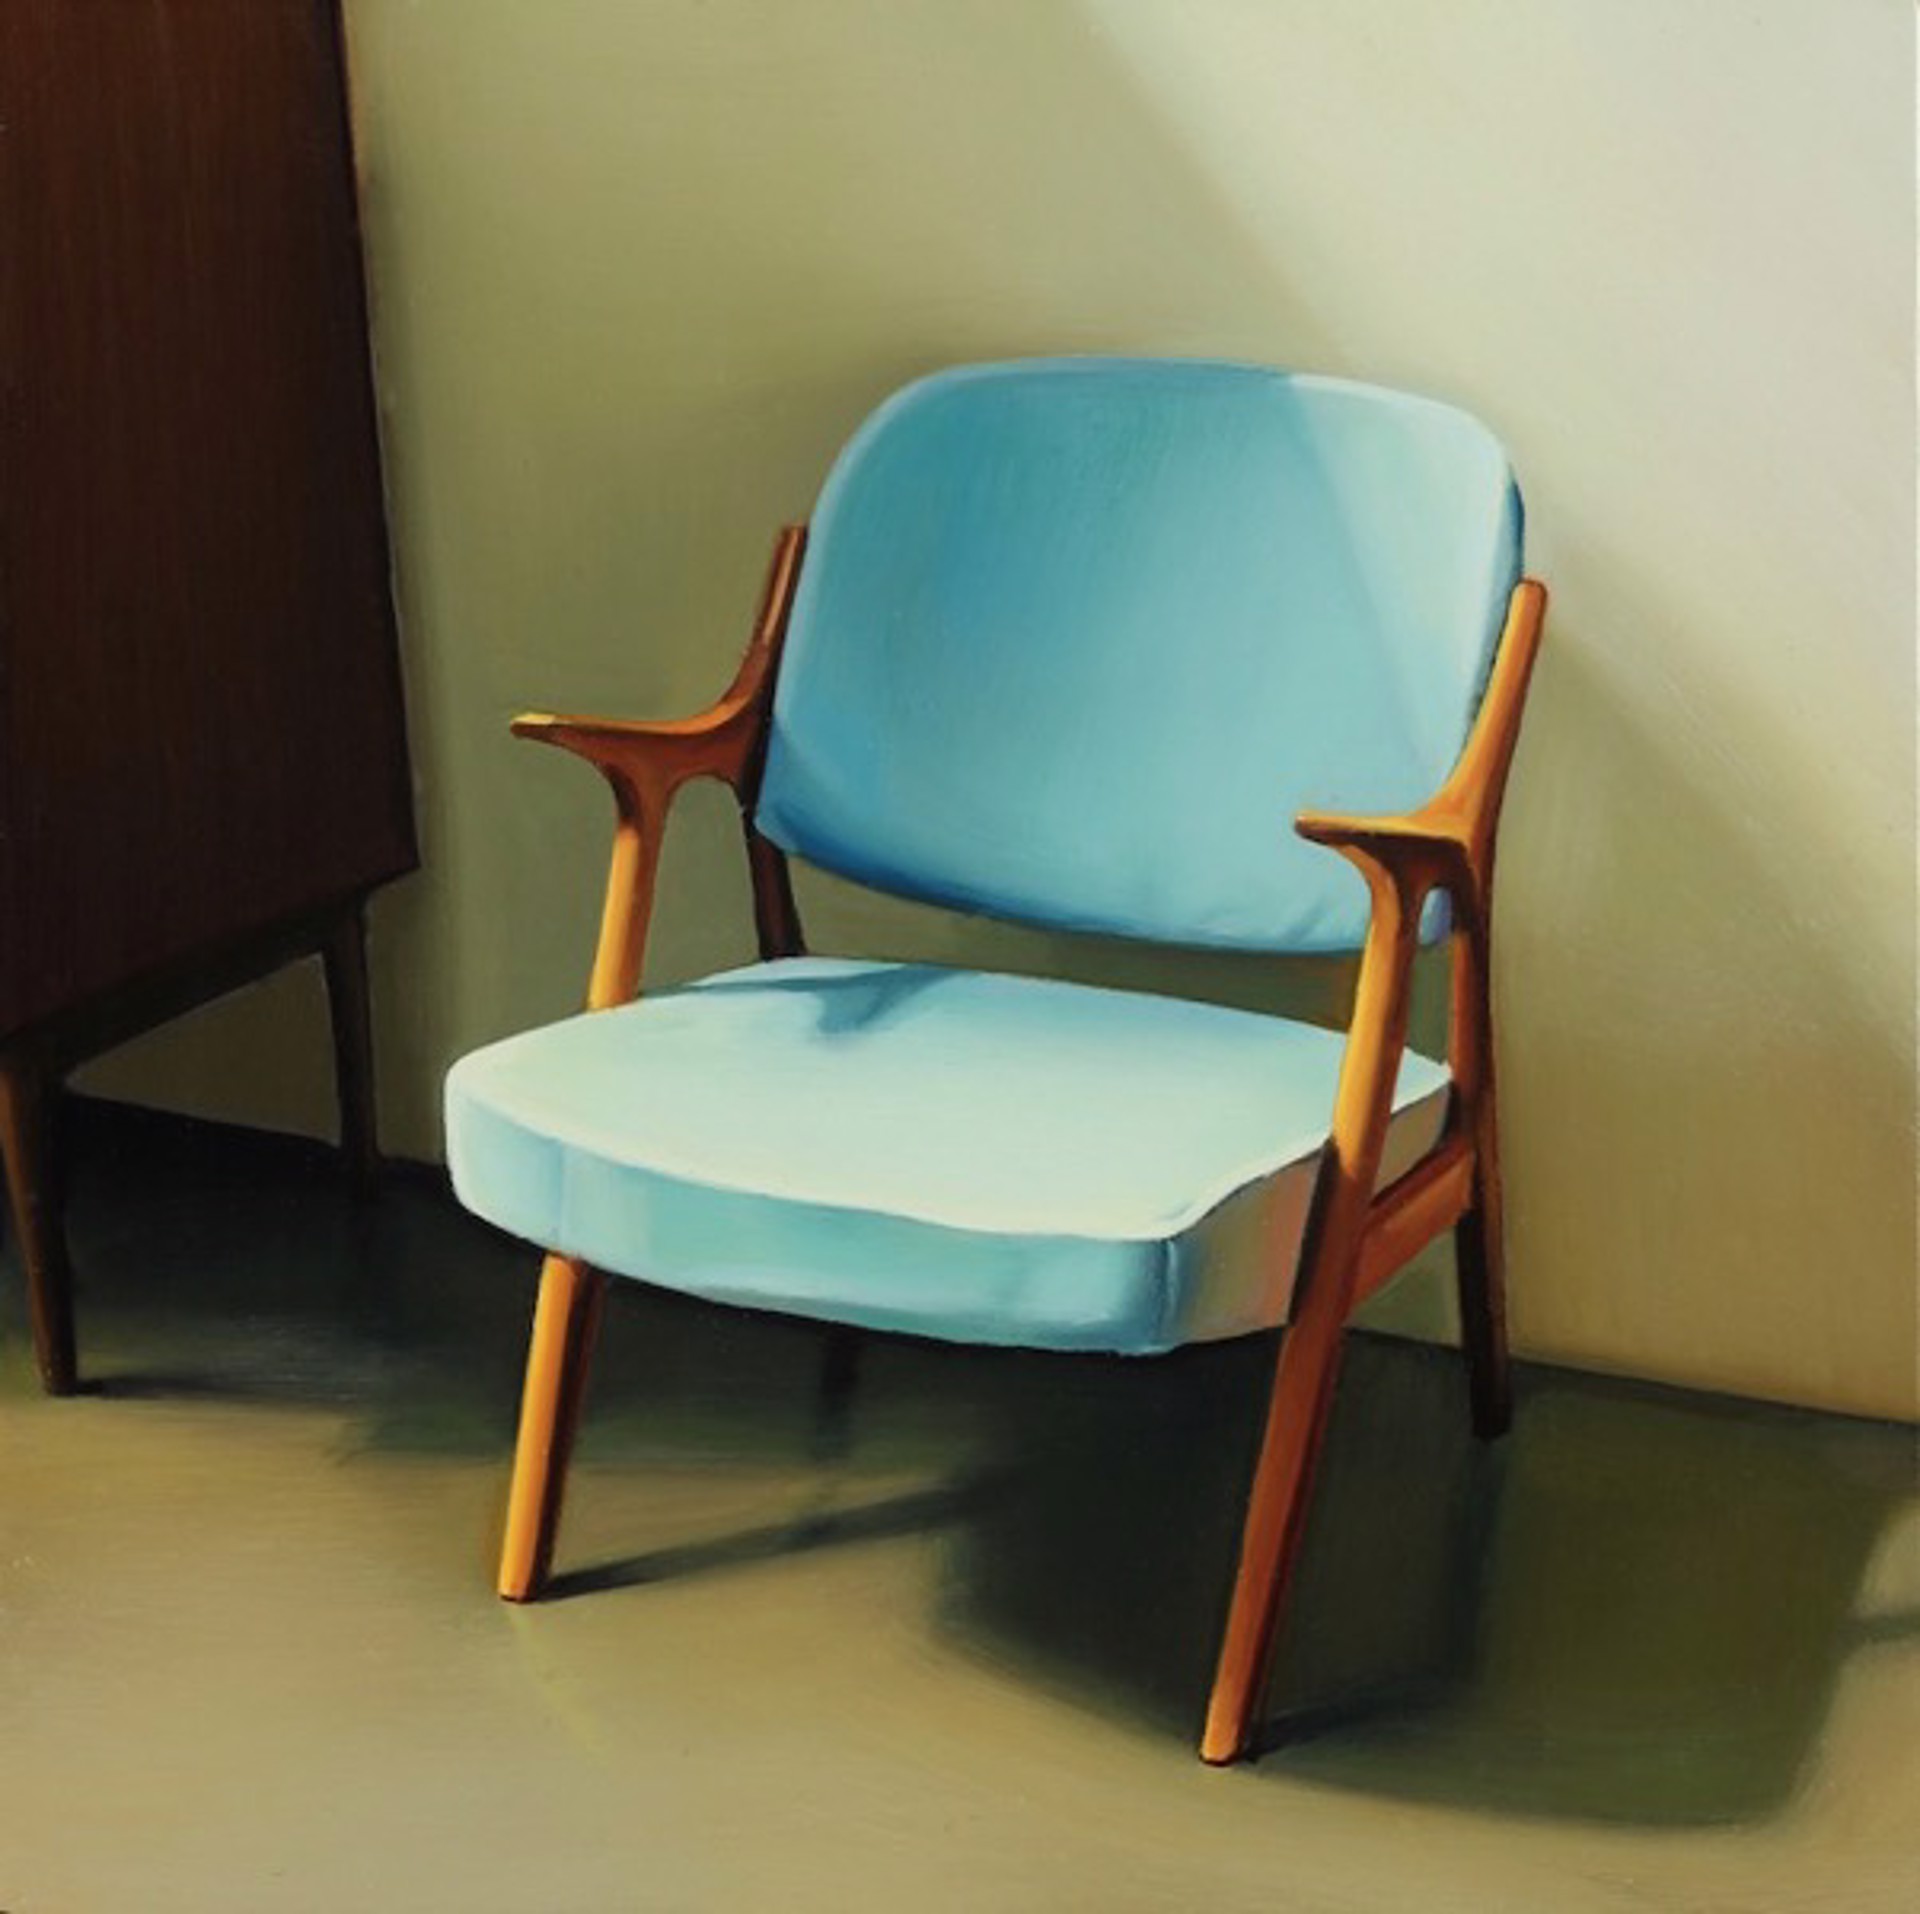 Berkeley Chair #1 by Ada Sadler